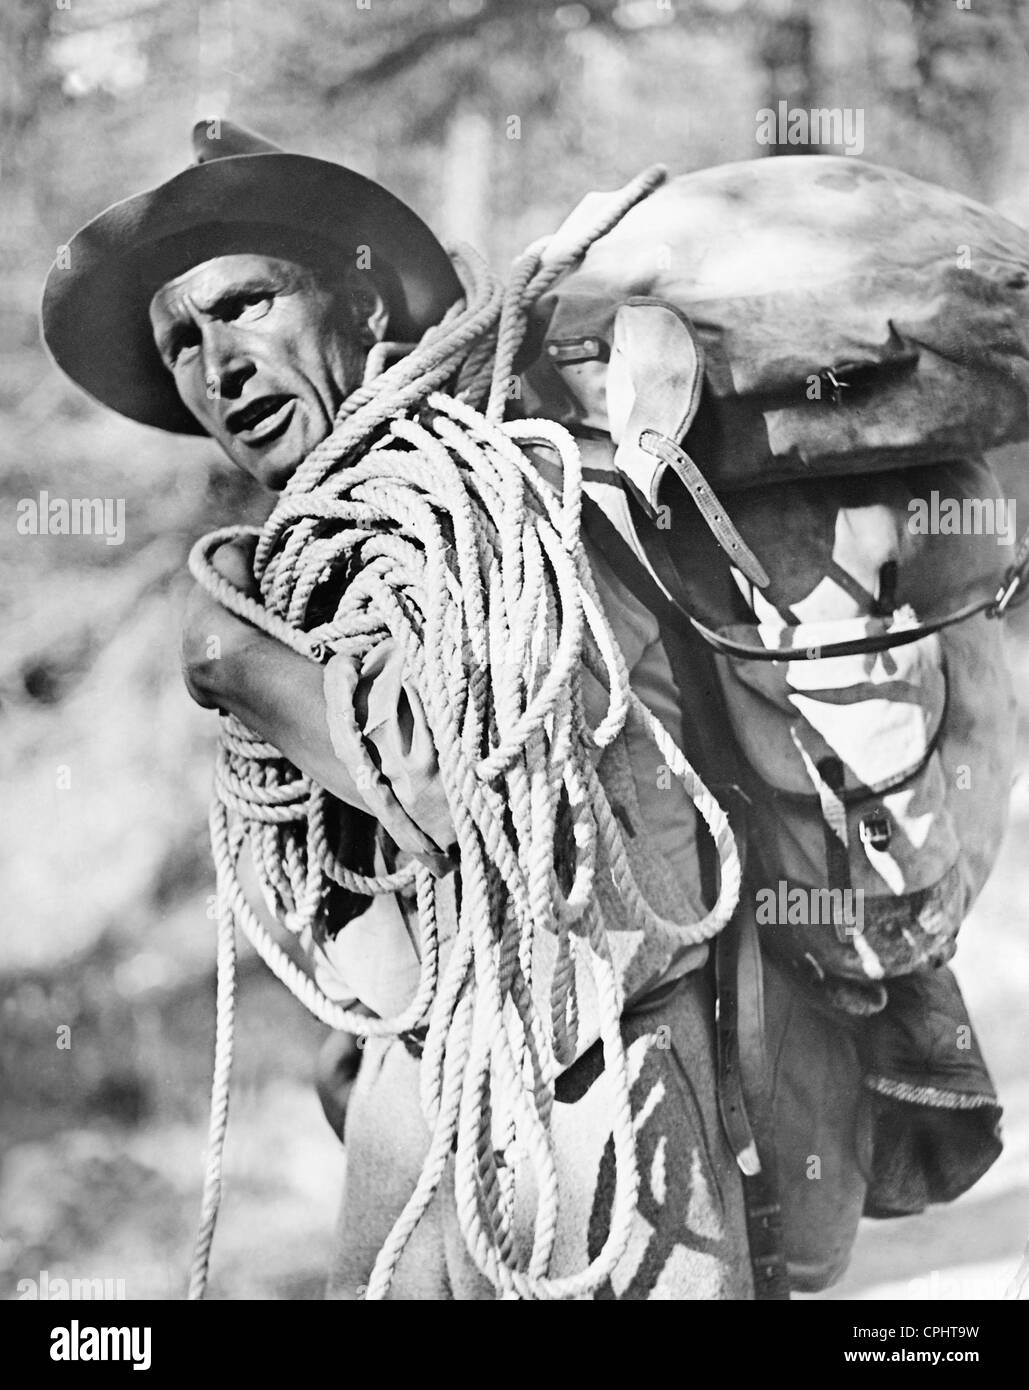 Luis Trenker in 'La montagna chiama', 1938 Foto stock - Alamy